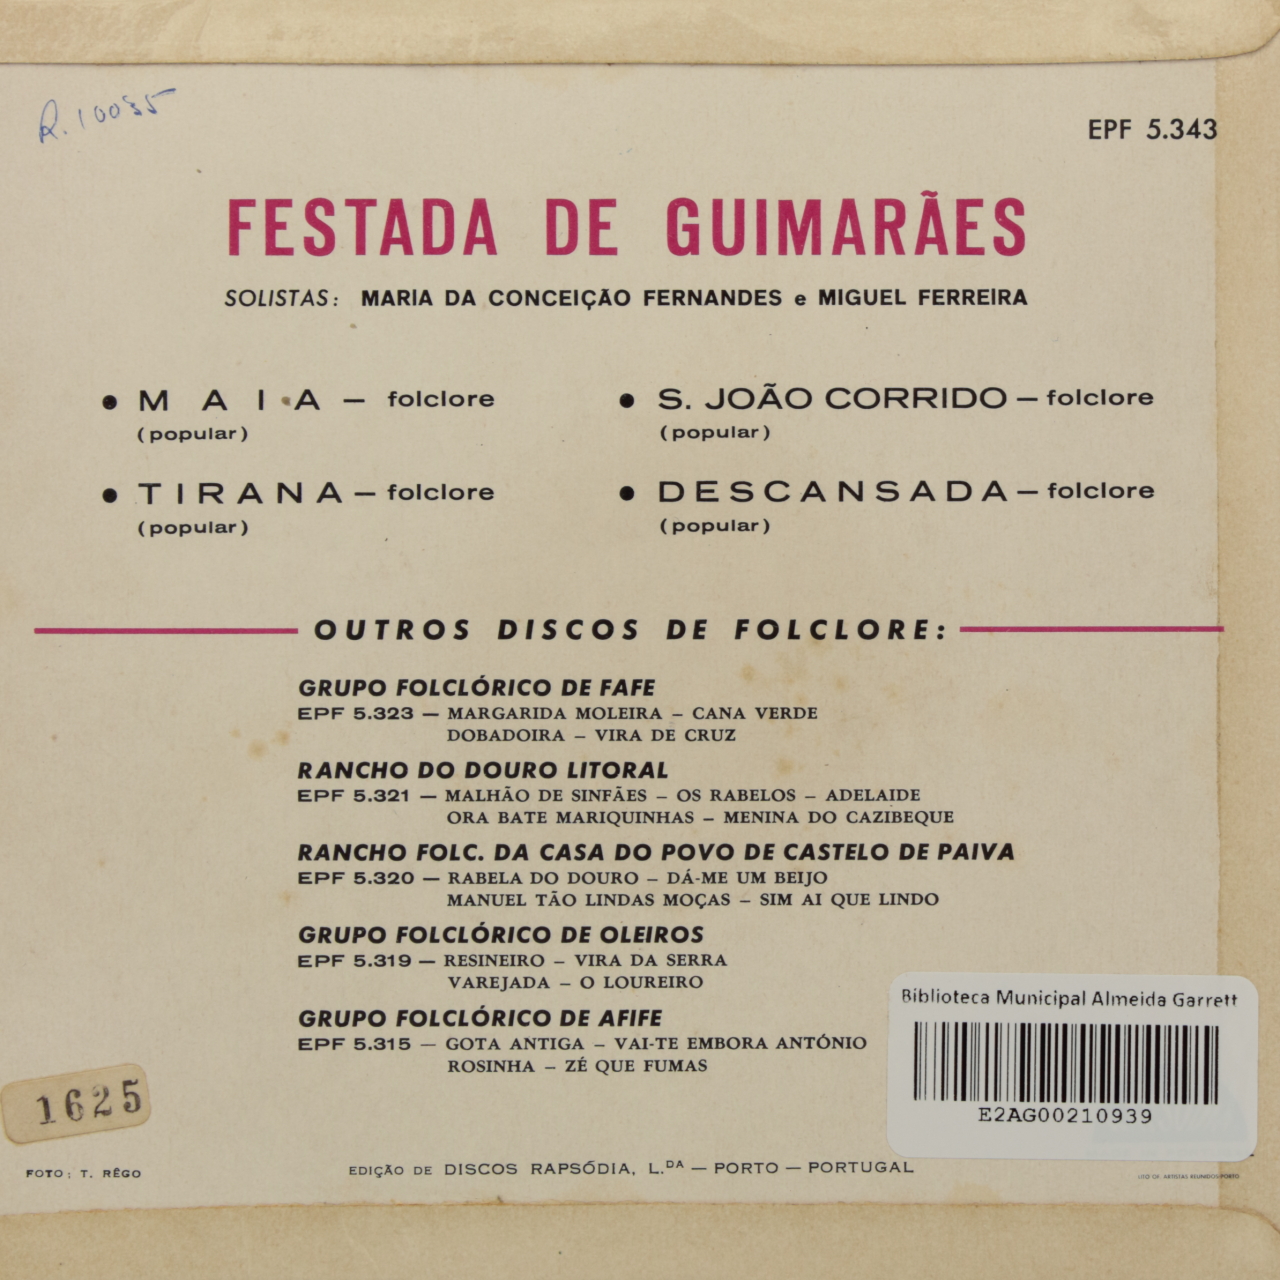 Festada de Guimarães